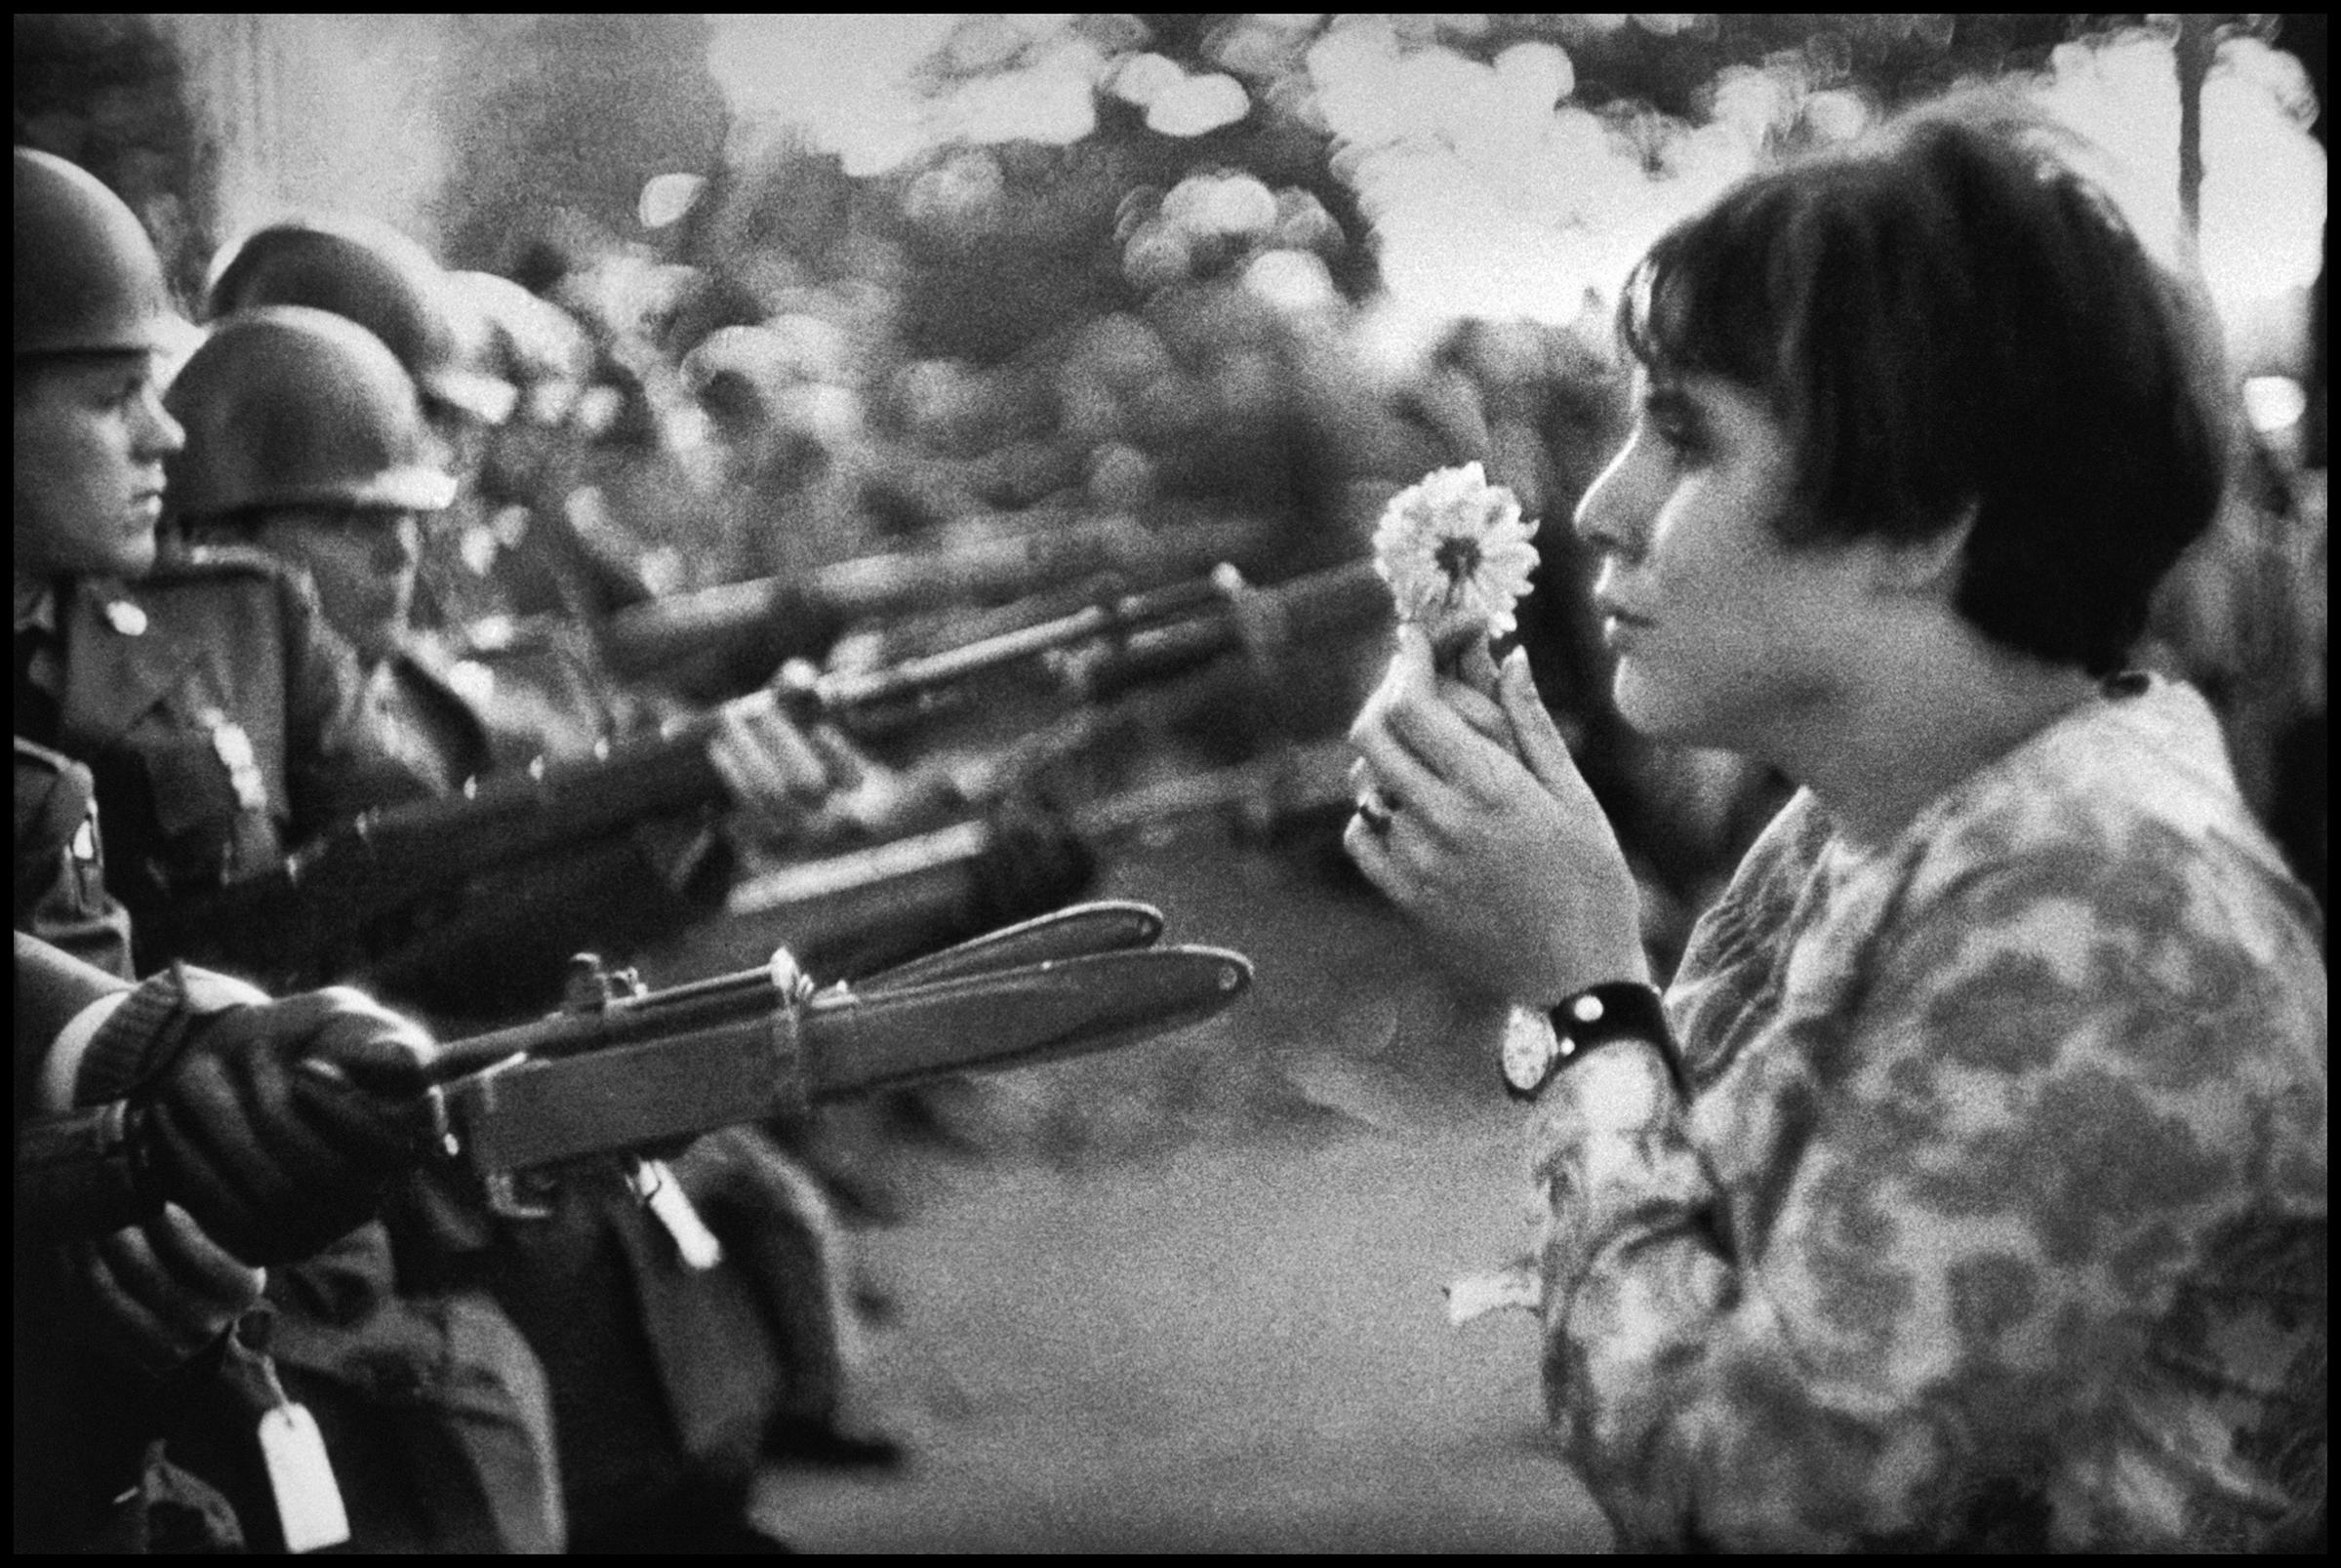 protest-Washington-DC-1967-Jan-Rose-KASMIR-National-Guard-Pentagon-1967-anti-Vietnam-march-marc-riboud-magnum